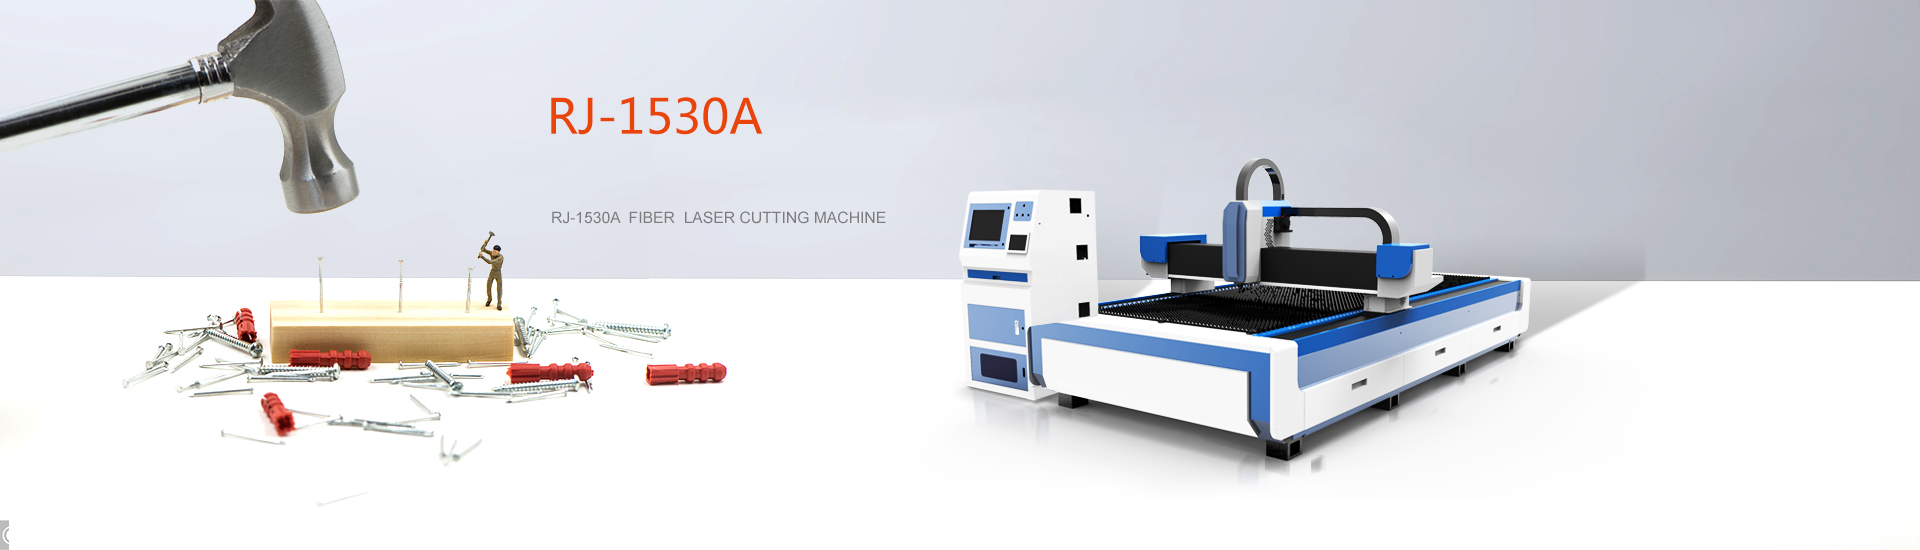 How does a tube laser cutting machine work? - Digital Journal